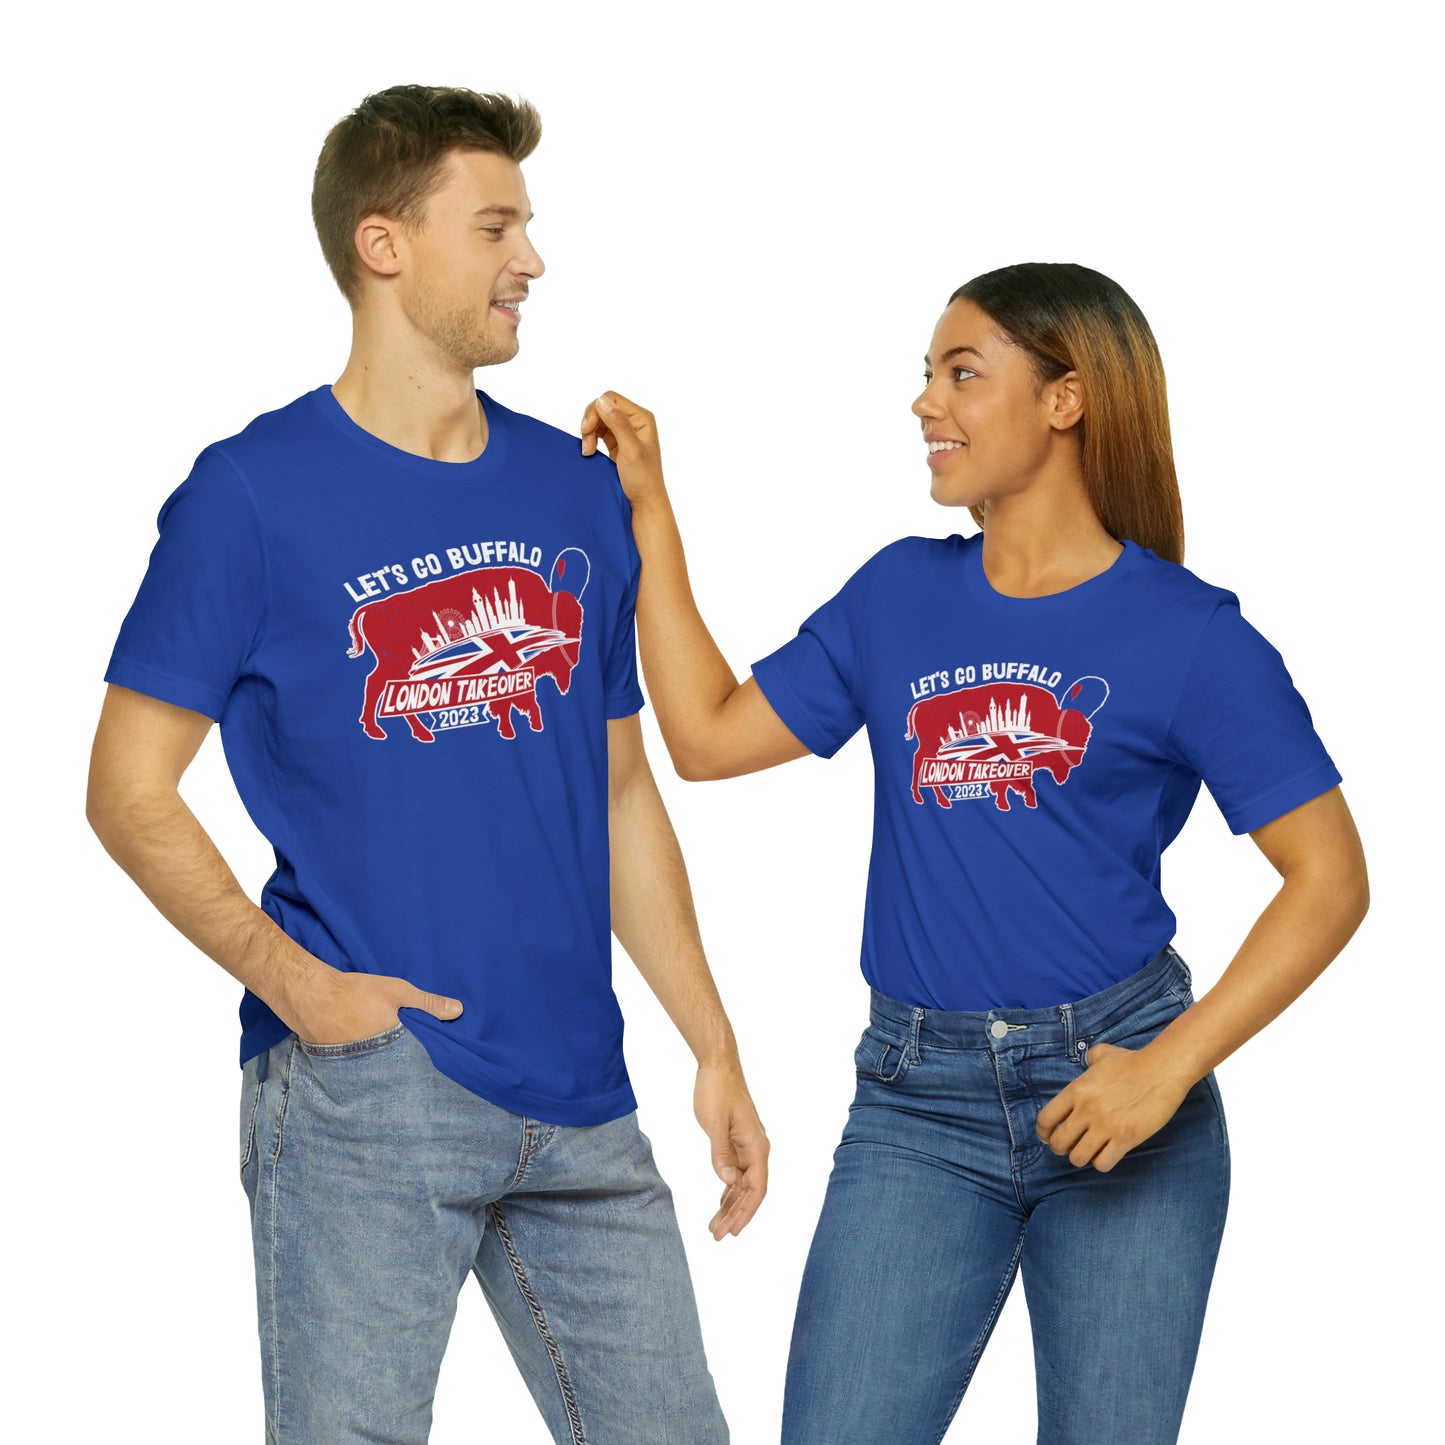 Buffalo Bills London Takeover T-Shirt